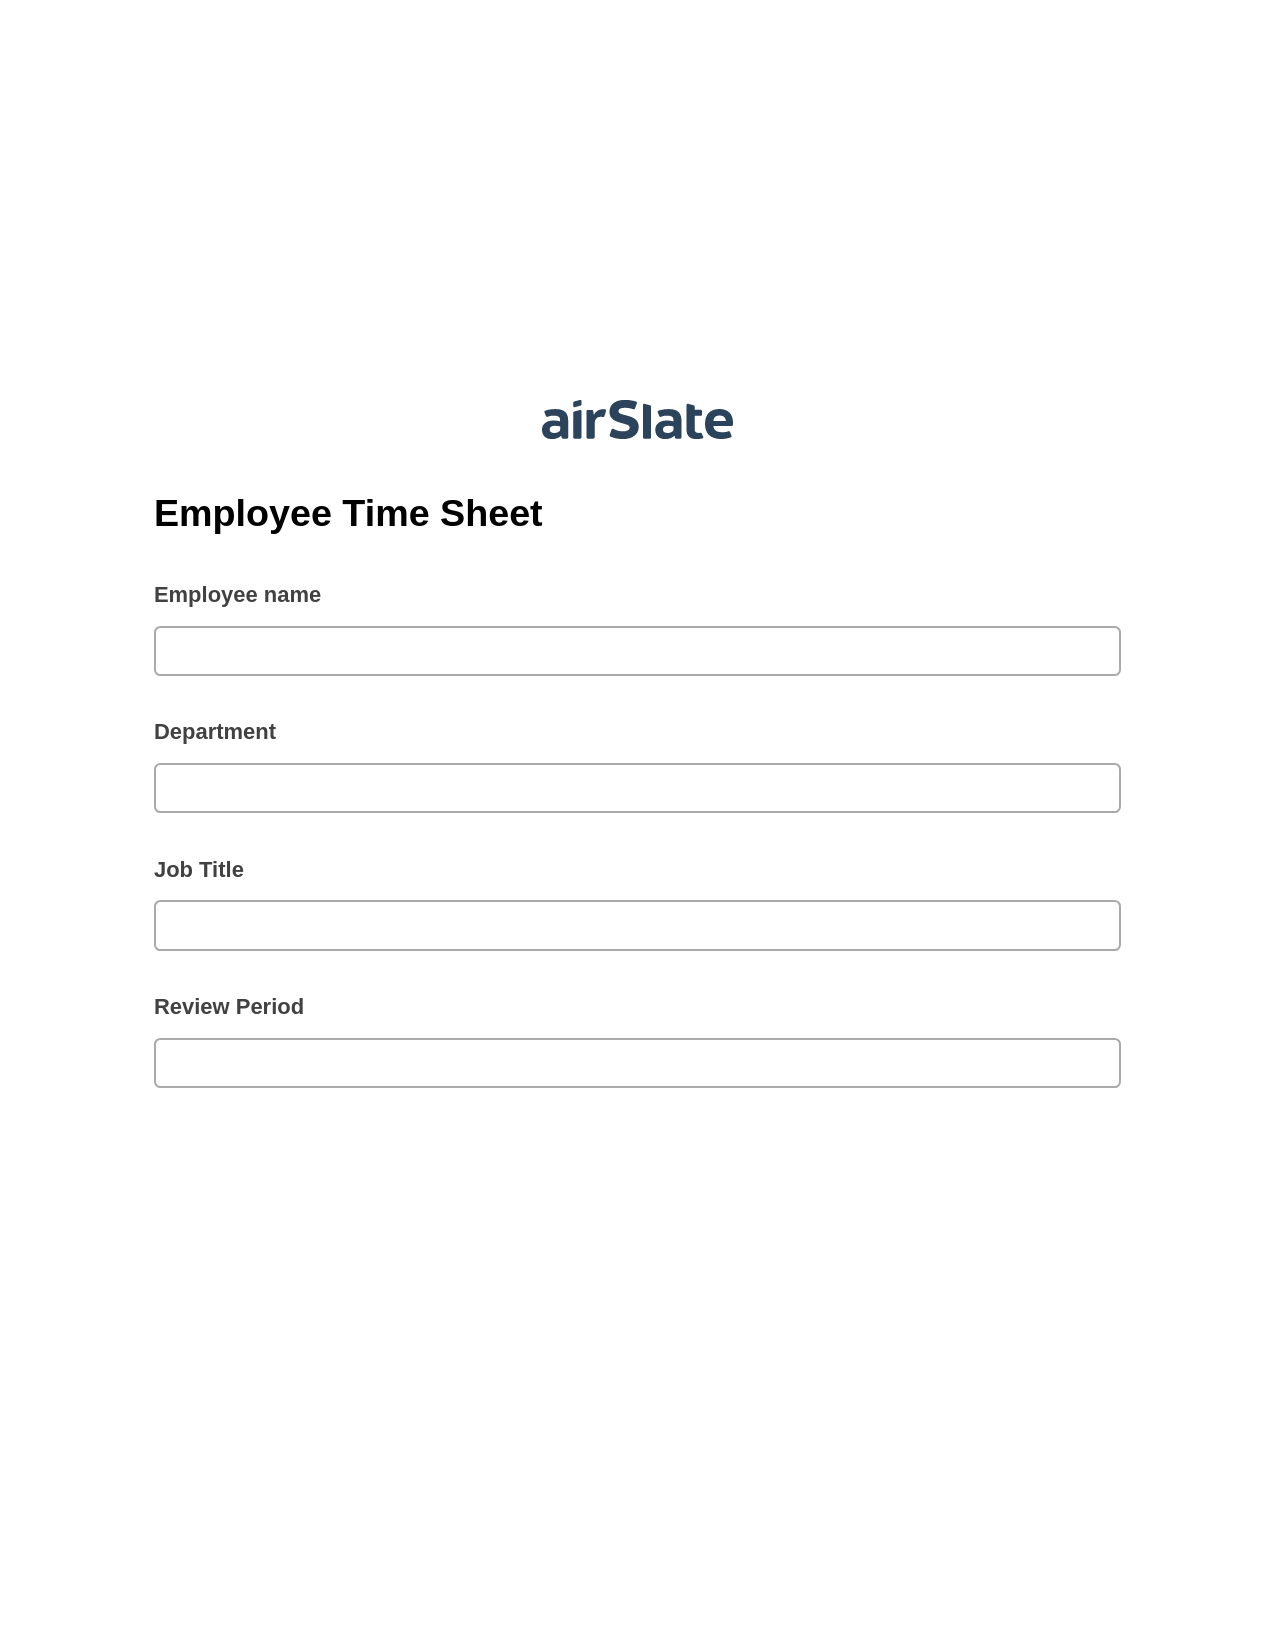 Multirole Employee Time Sheet Pre-fill from Excel Spreadsheet Bot, Create Salesforce Records Bot, Slack Two-Way Binding Bot